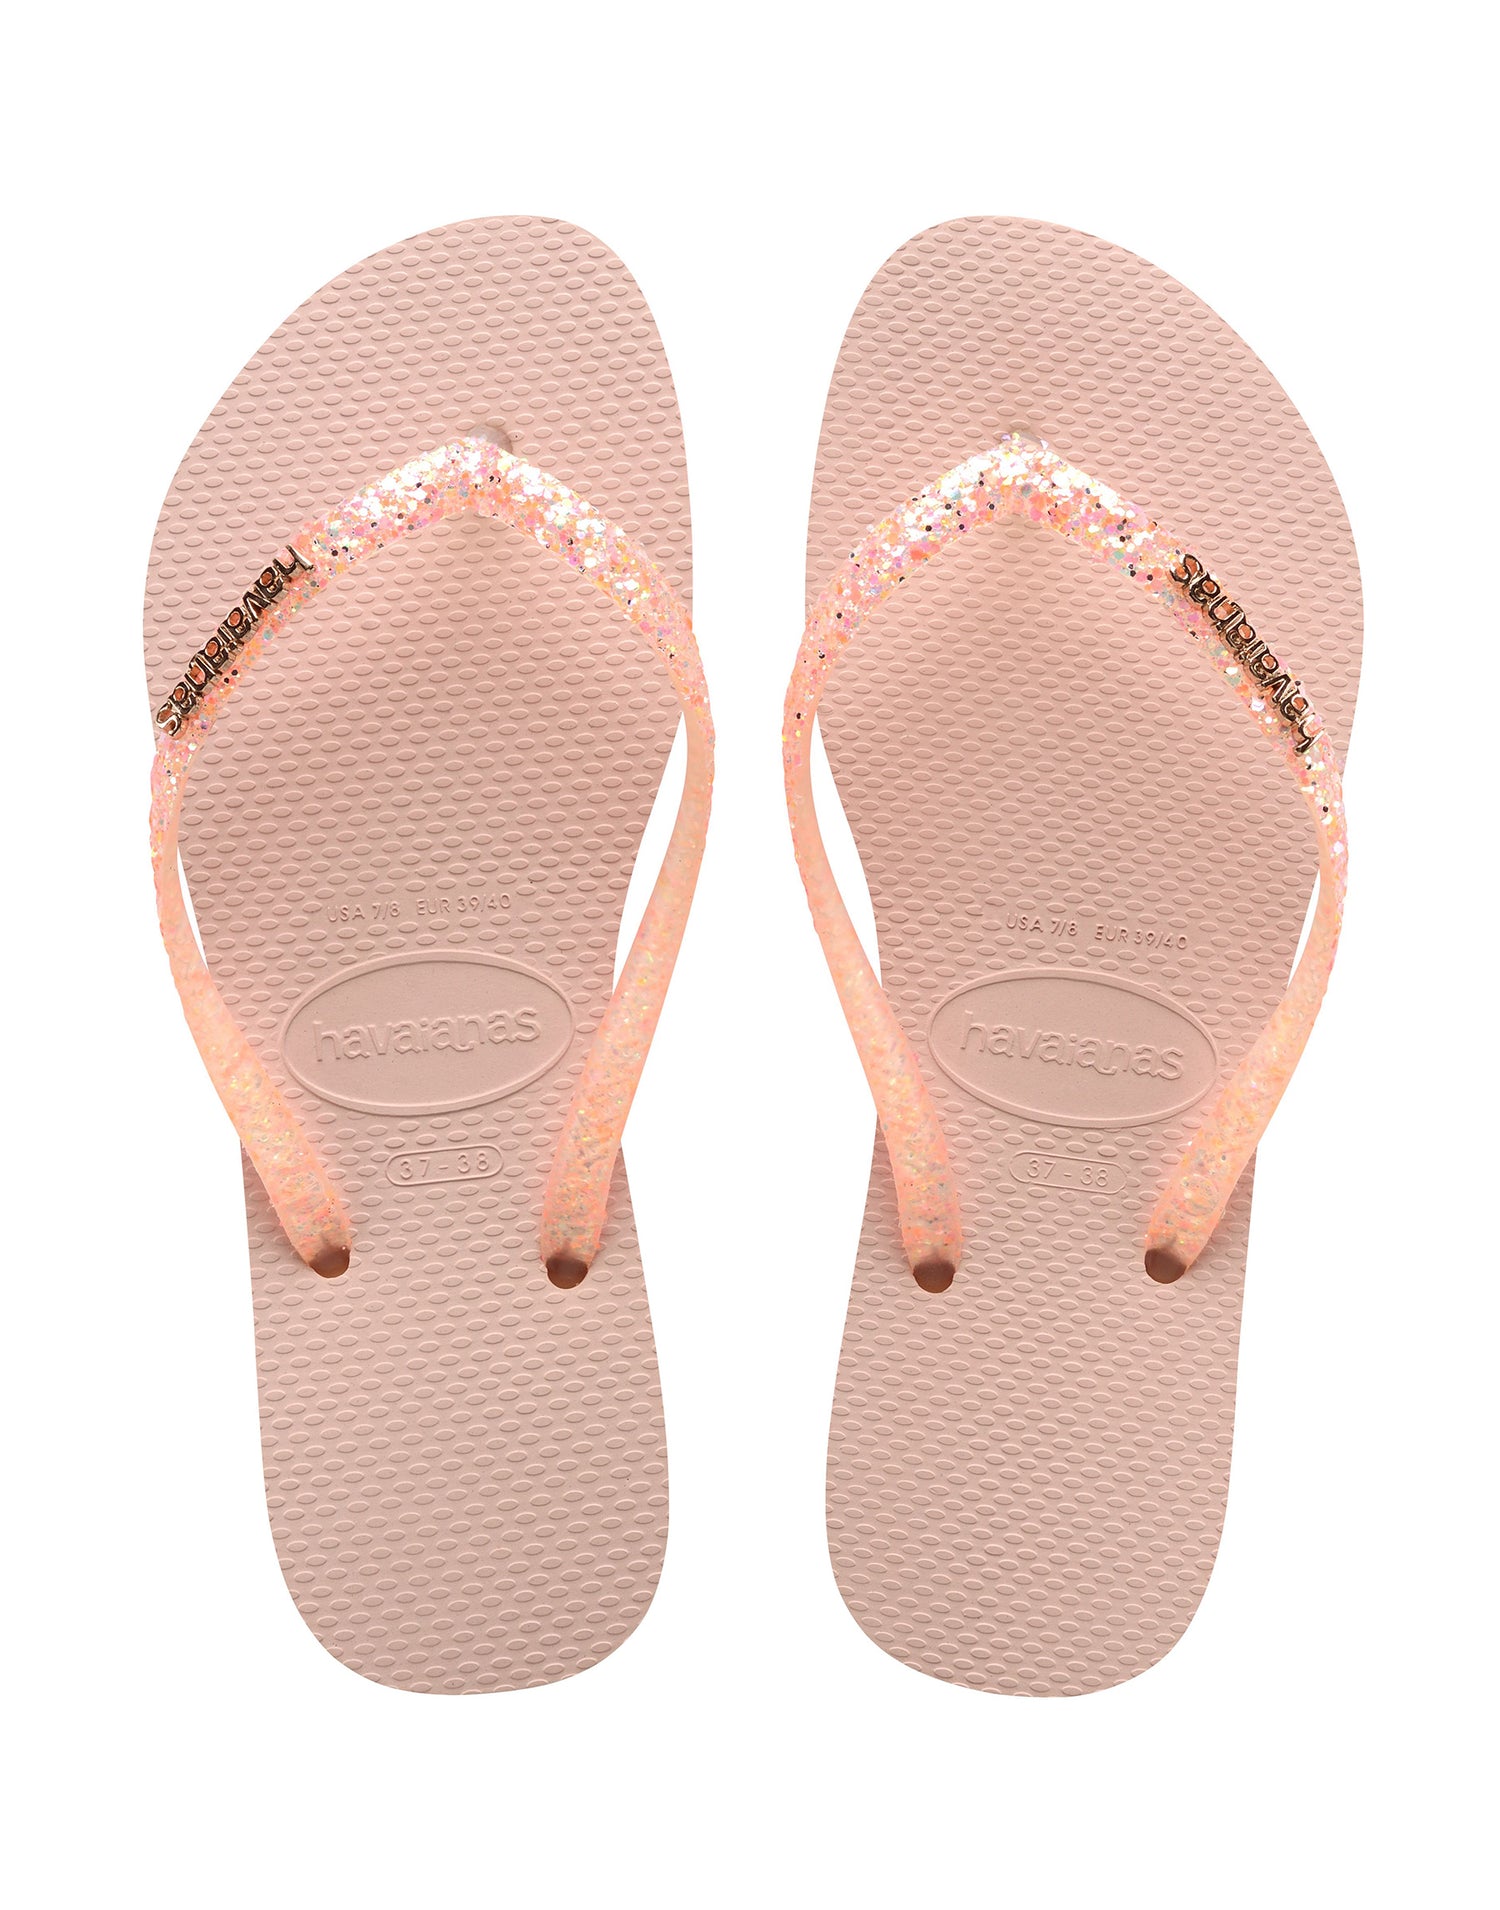 Slim Glitter Flourish Sandal in Macaron Pink Beach Swimwear